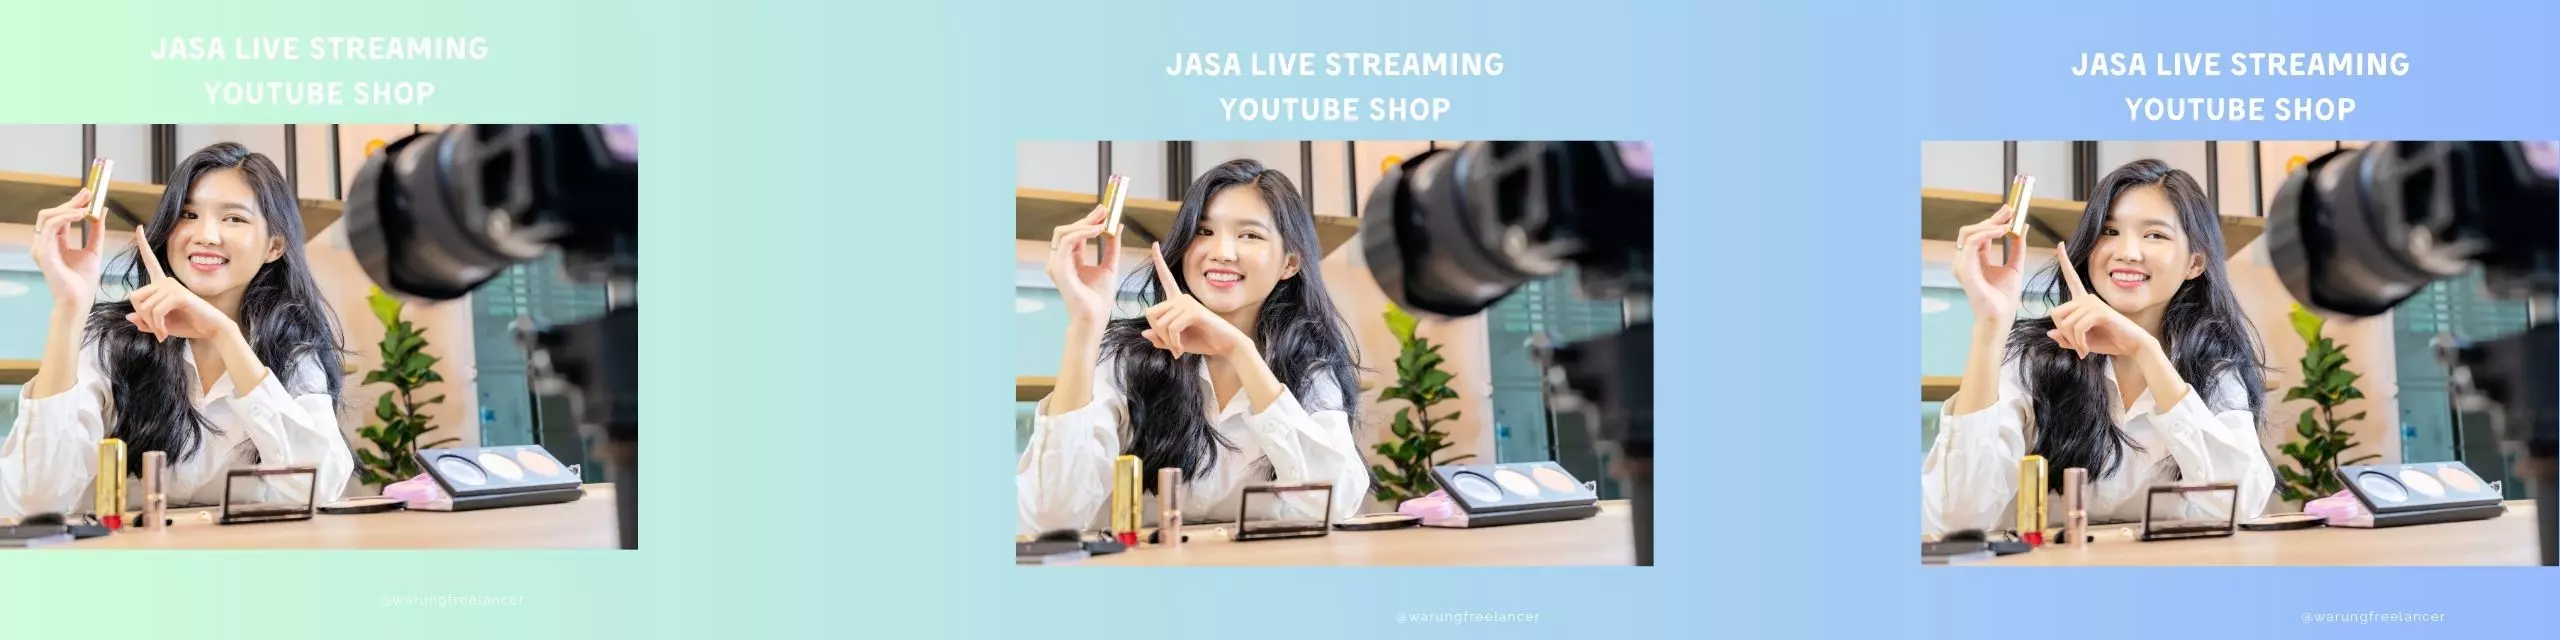 Jasa Live Streaming Youtube Shop